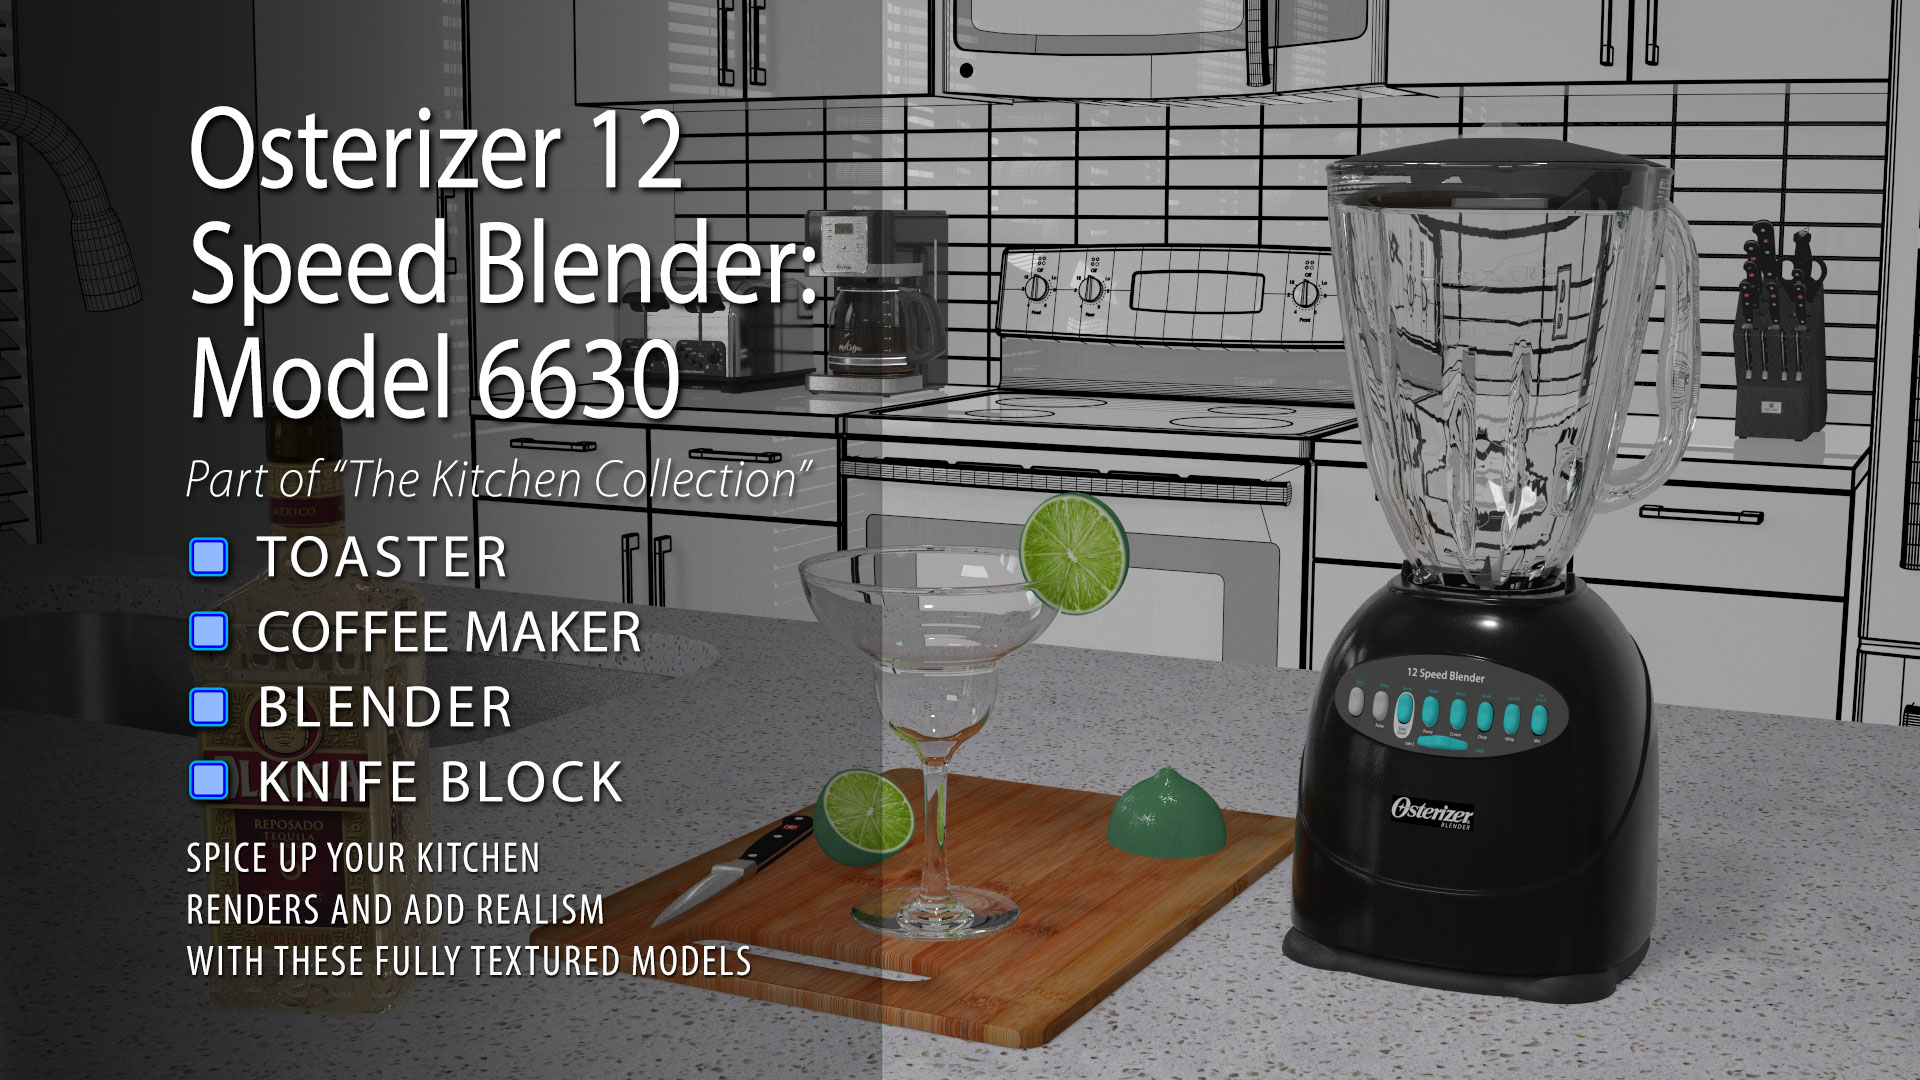 Osterizer 12 Speed Blender